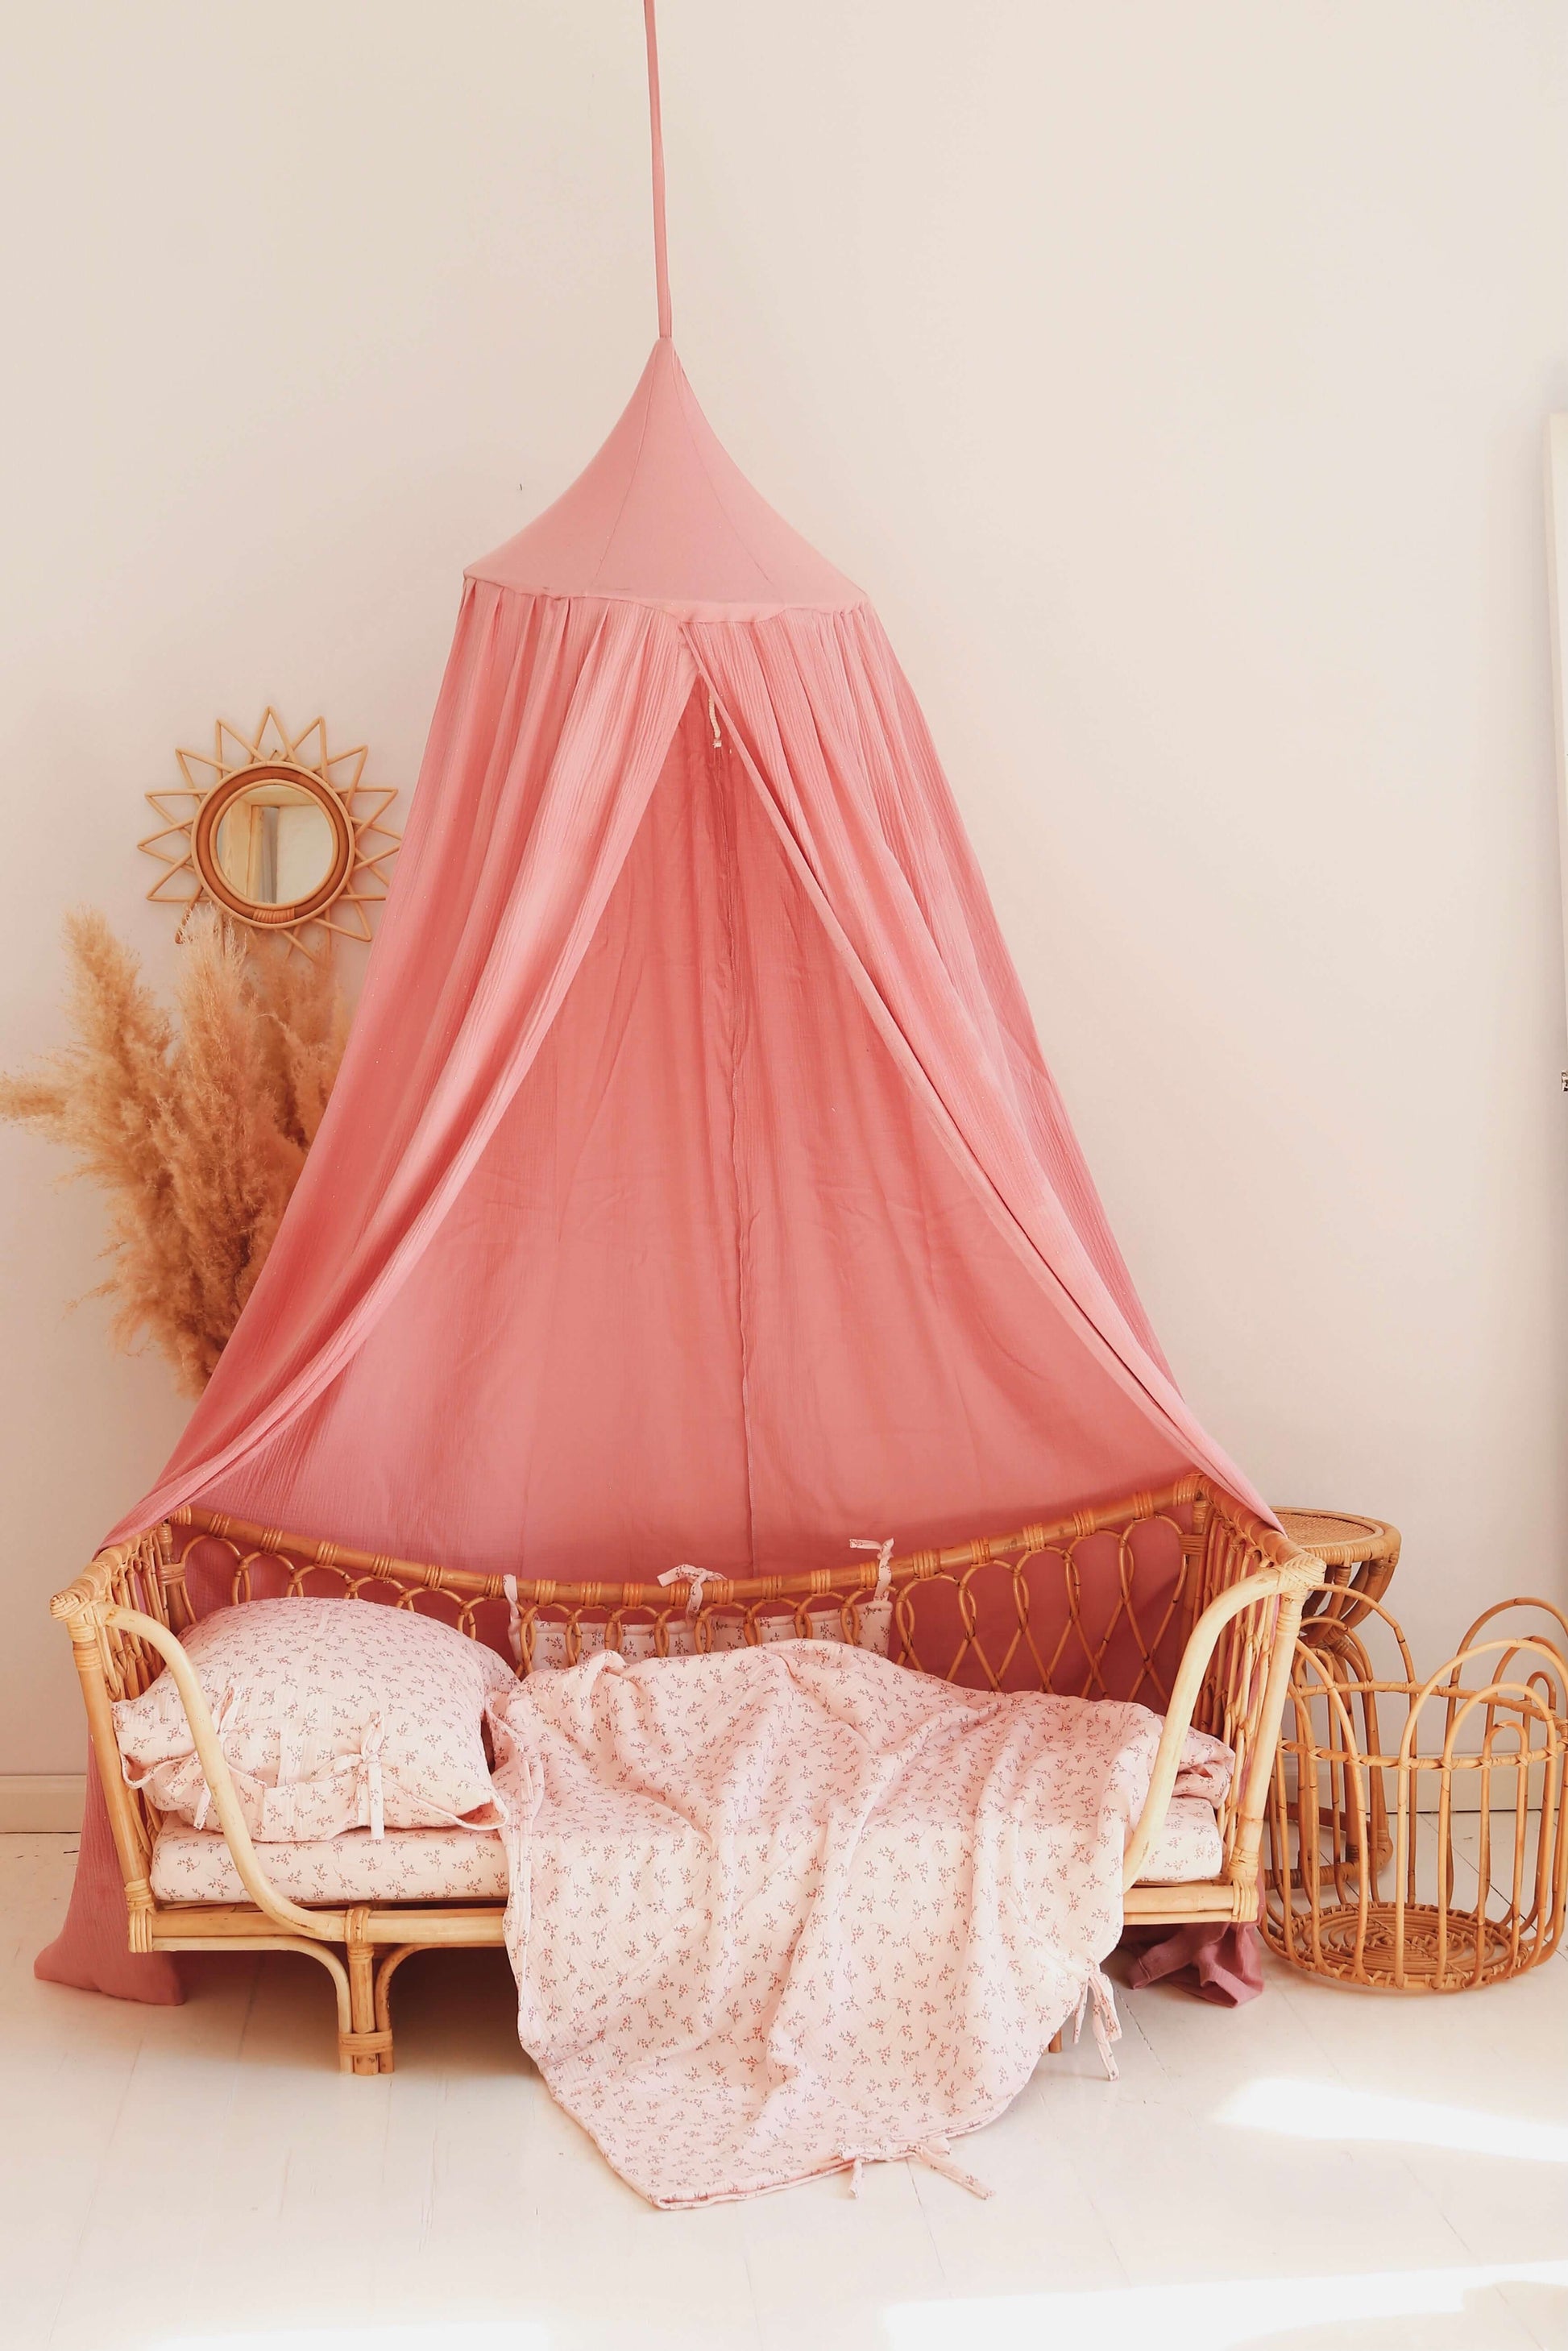 Matuu - Pinky natural - bedding sets, duvet cover, case pillow